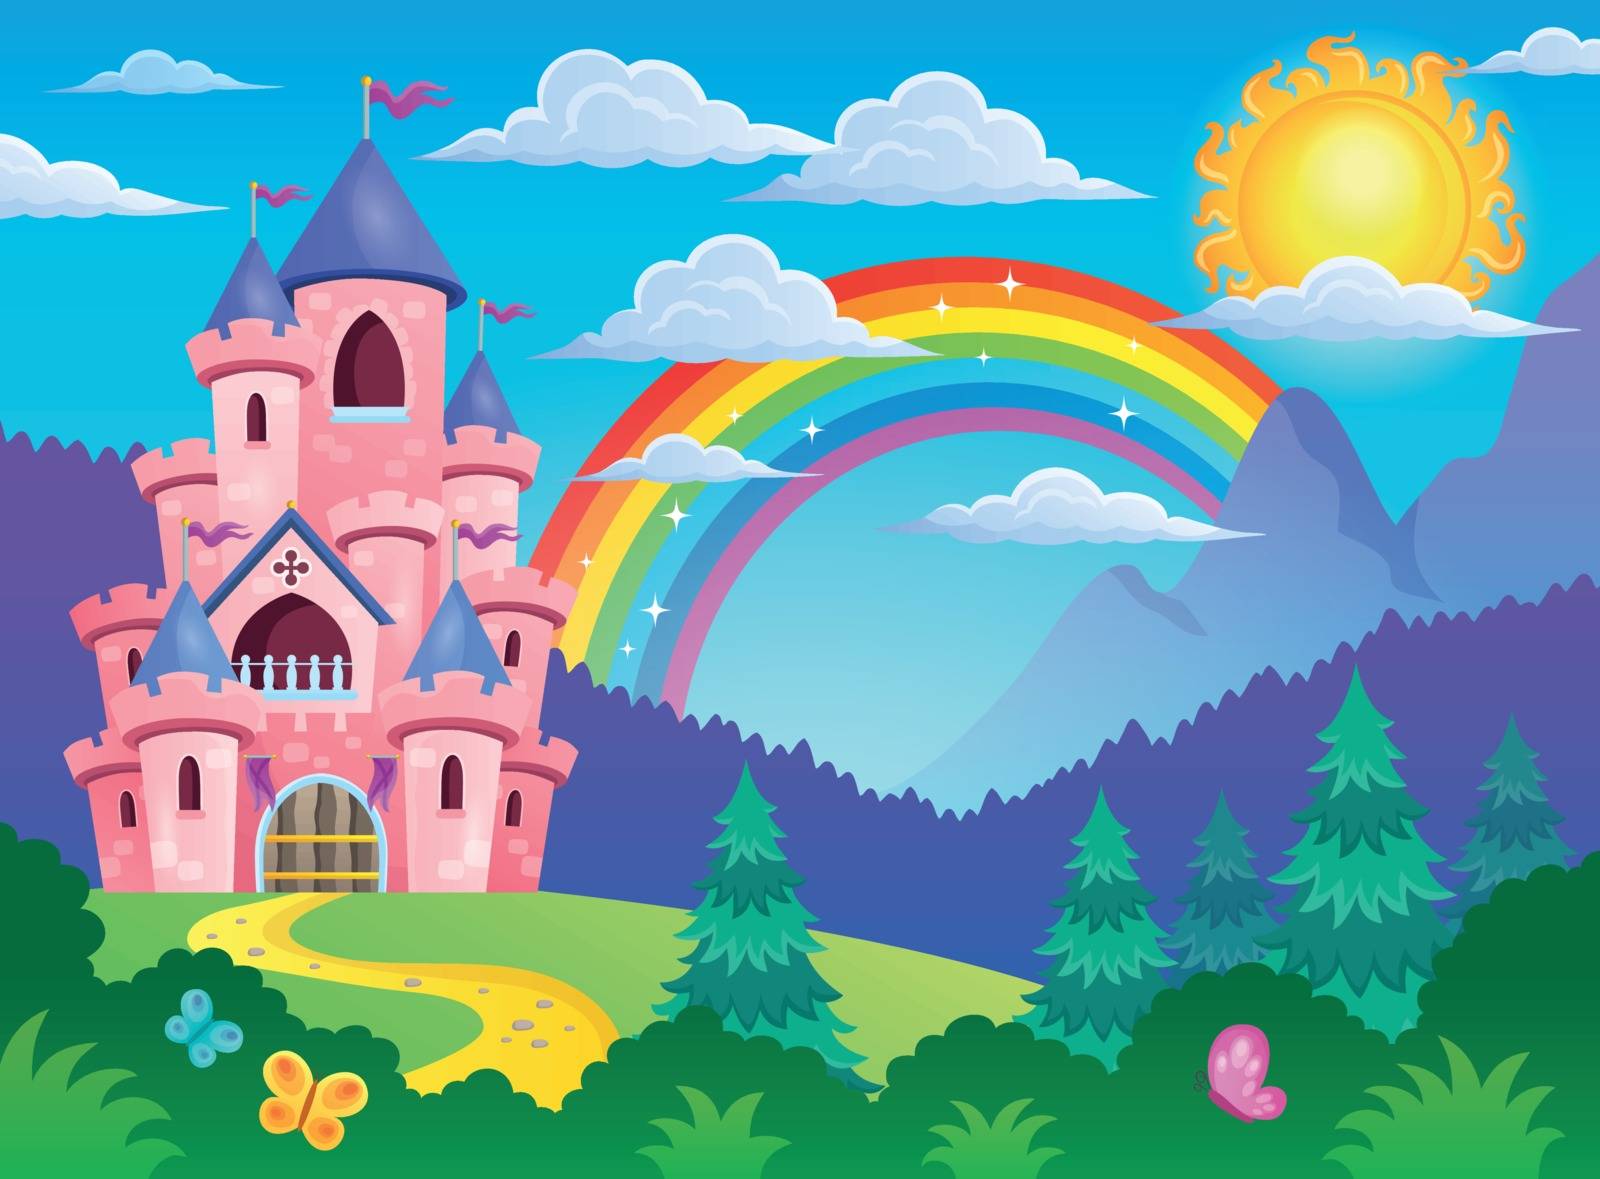 Pink castle theme image 4 - eps10 vector illustration.